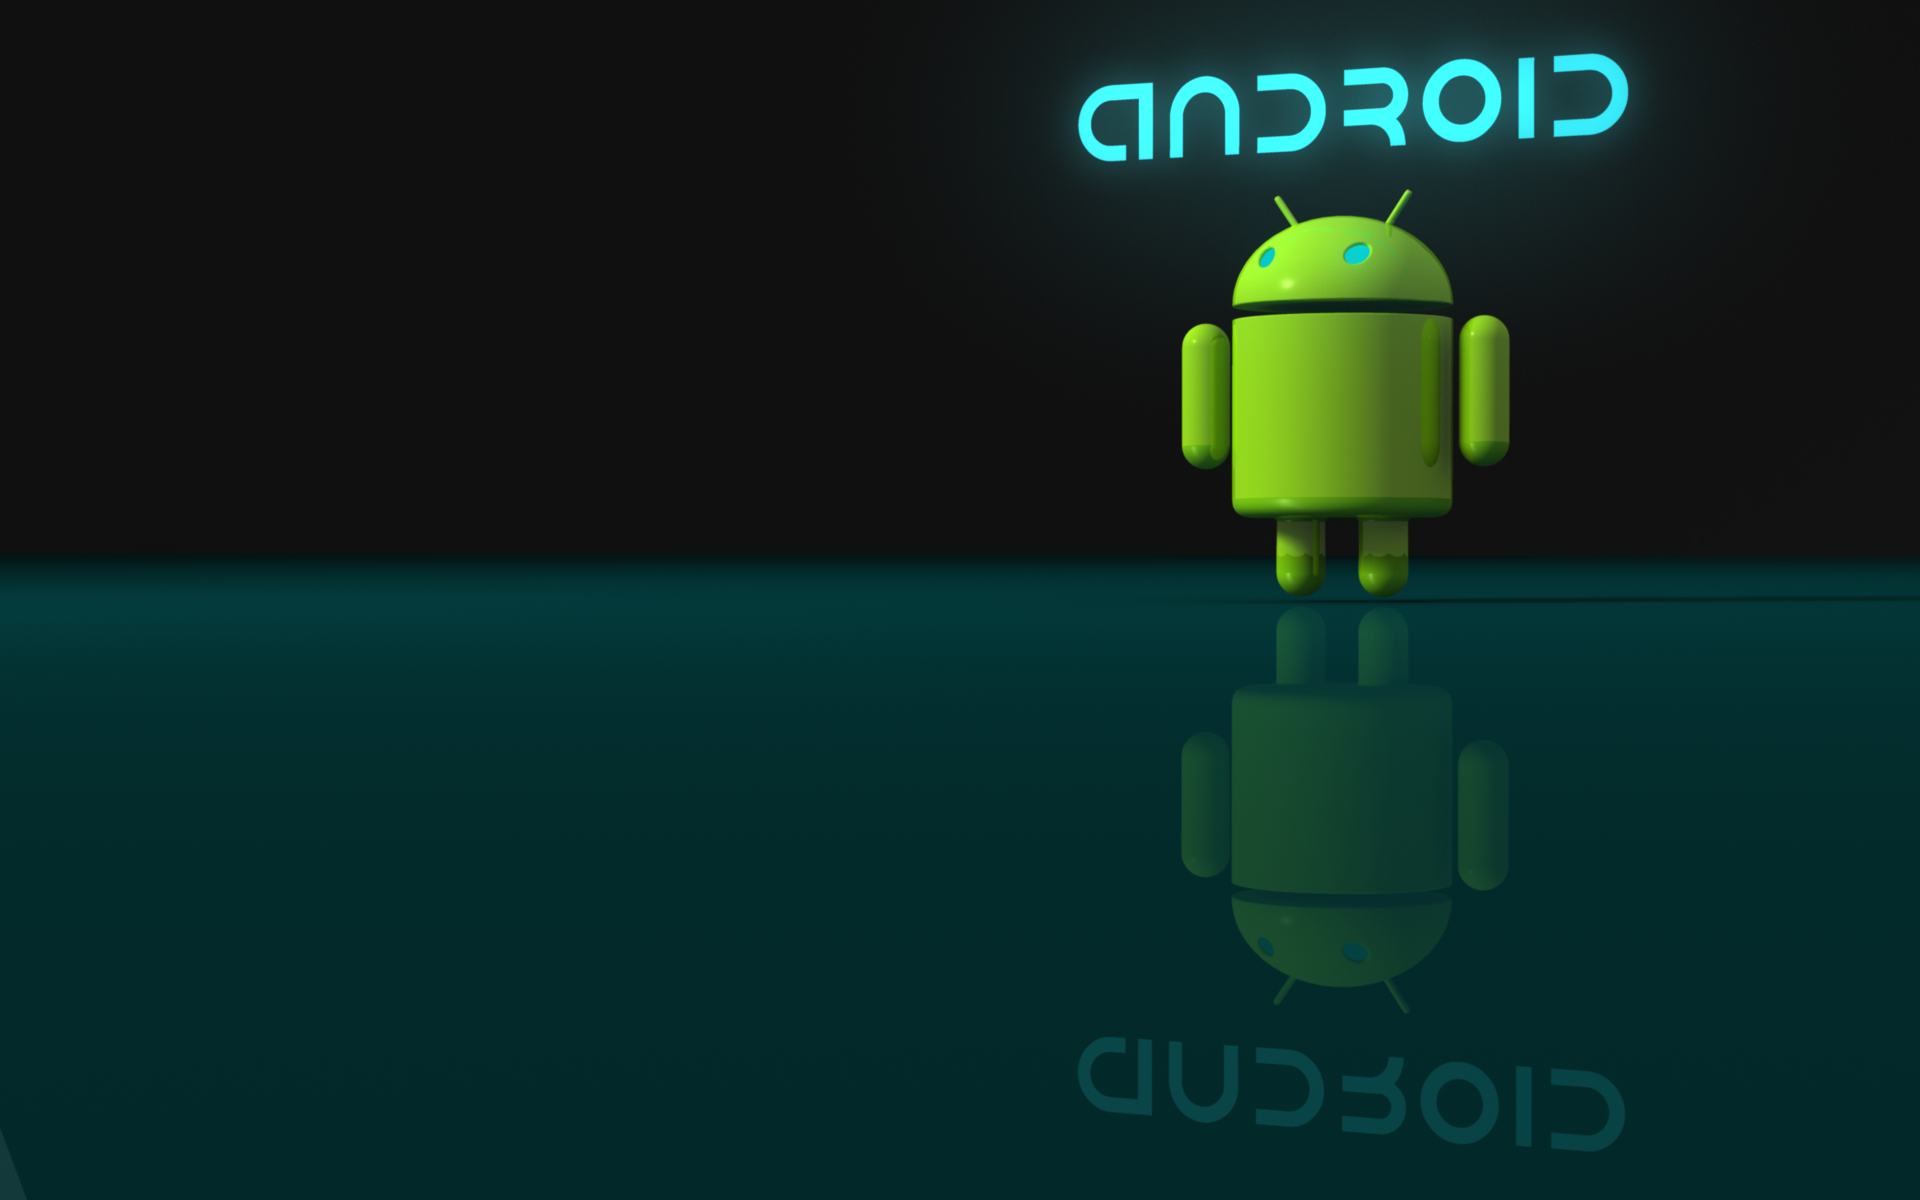 android logo wallpaper hd